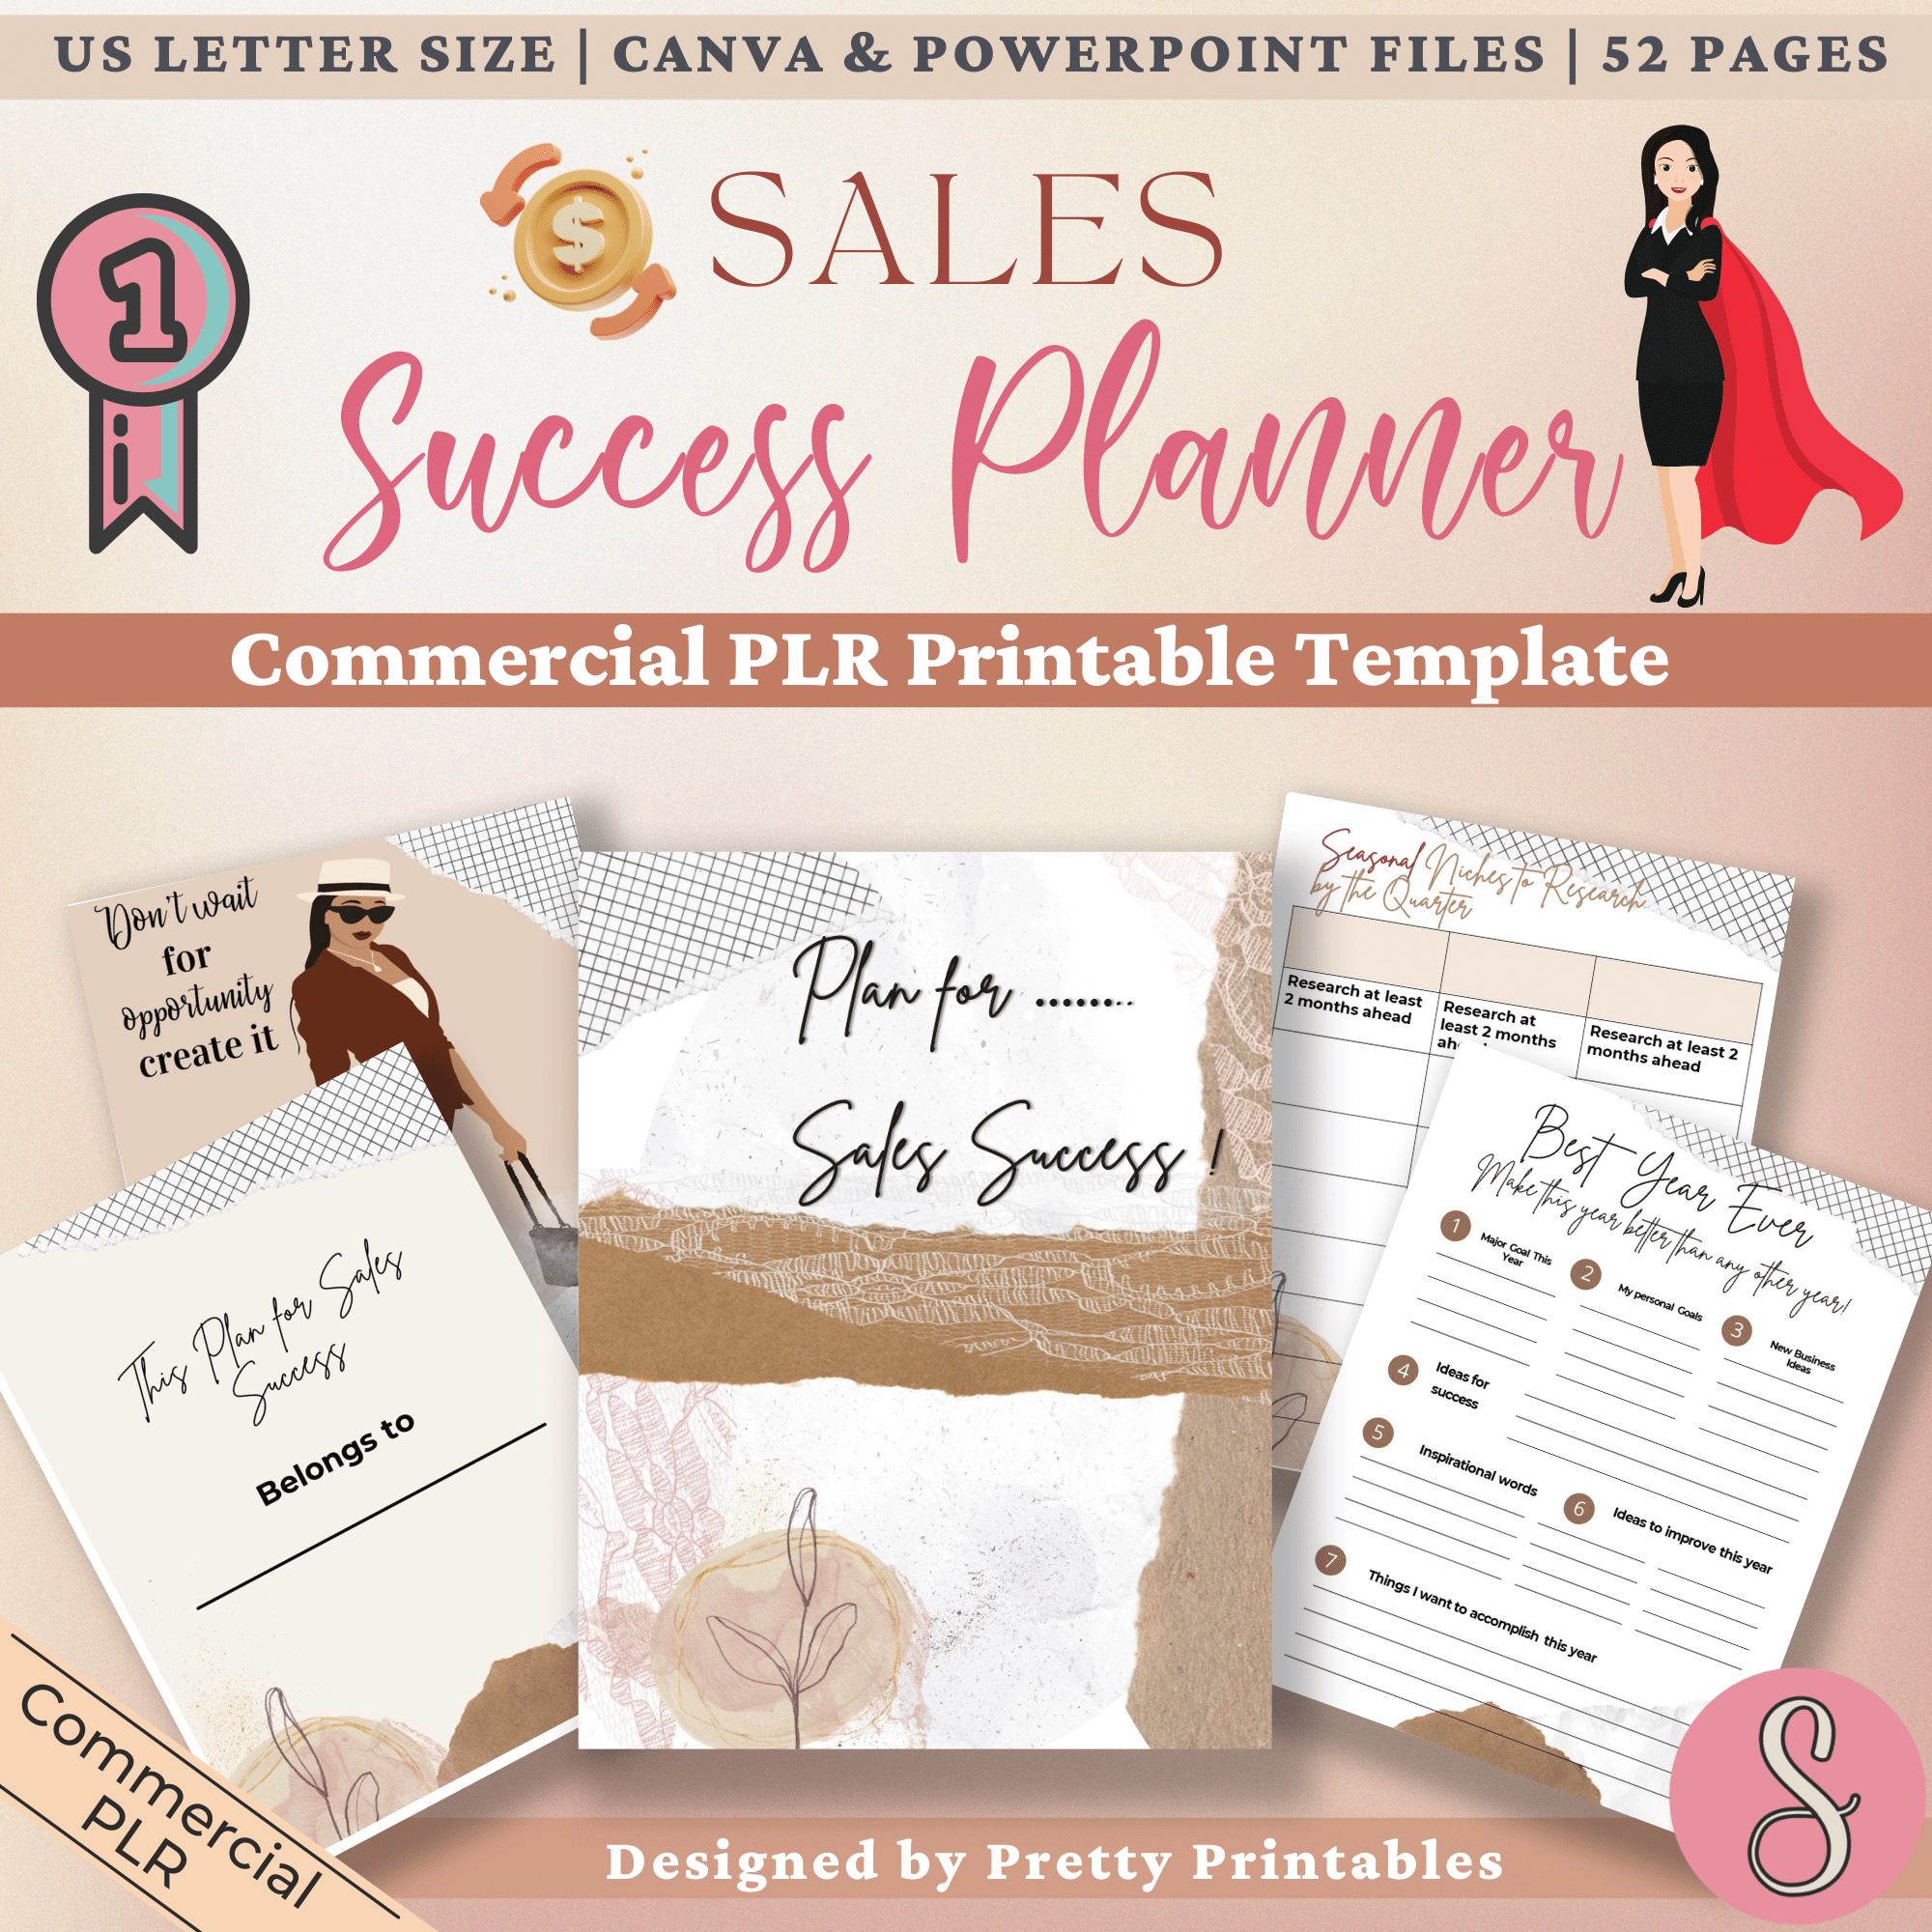 Sales Success Planner Commercial PLR Printable Template